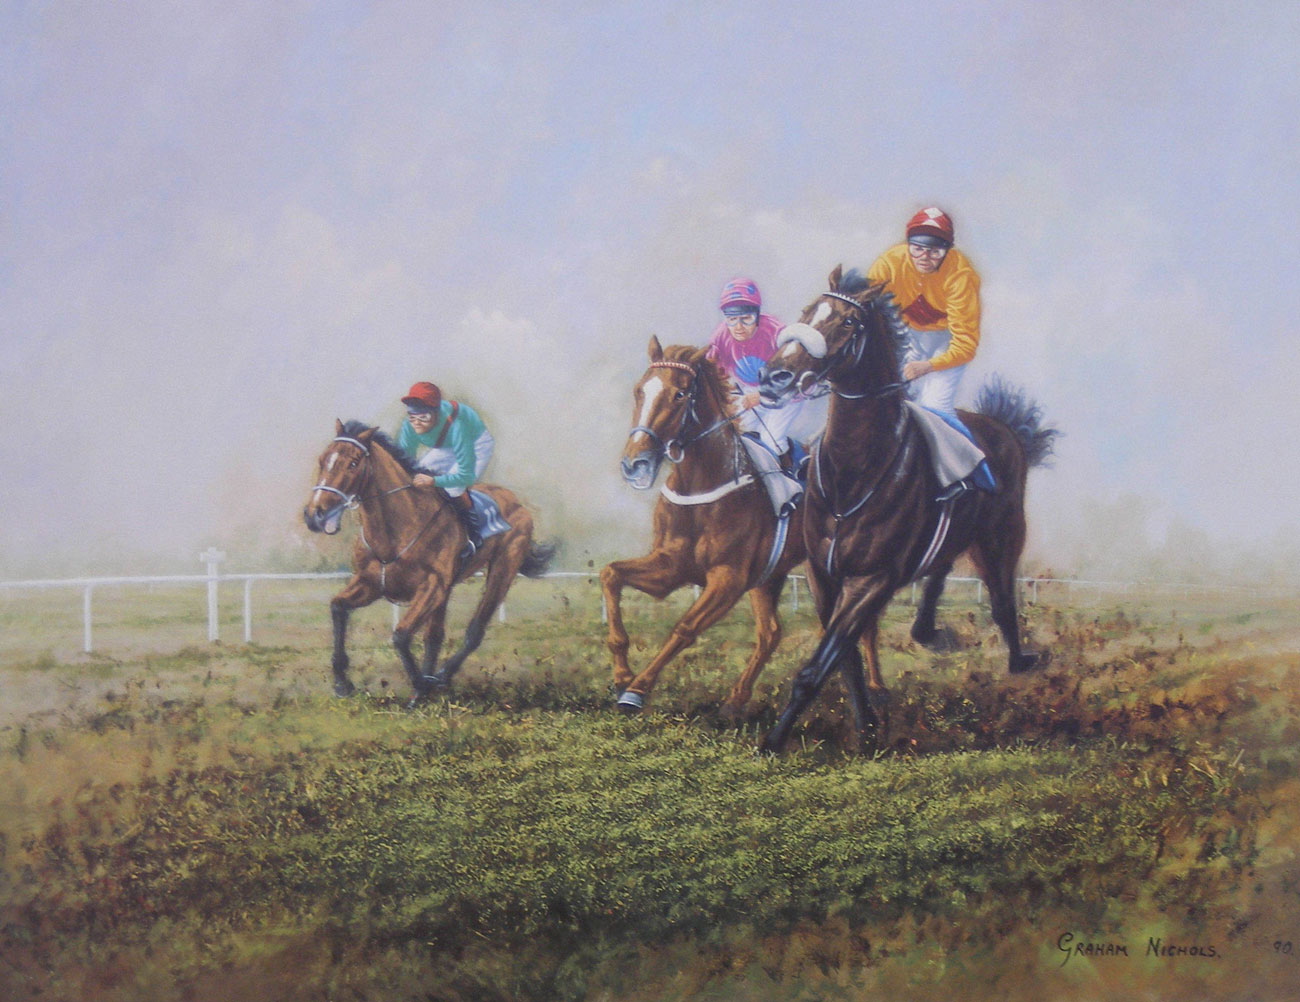 Three Abreast by Graham Nichols. Original horse art and prints on Bluethumb.